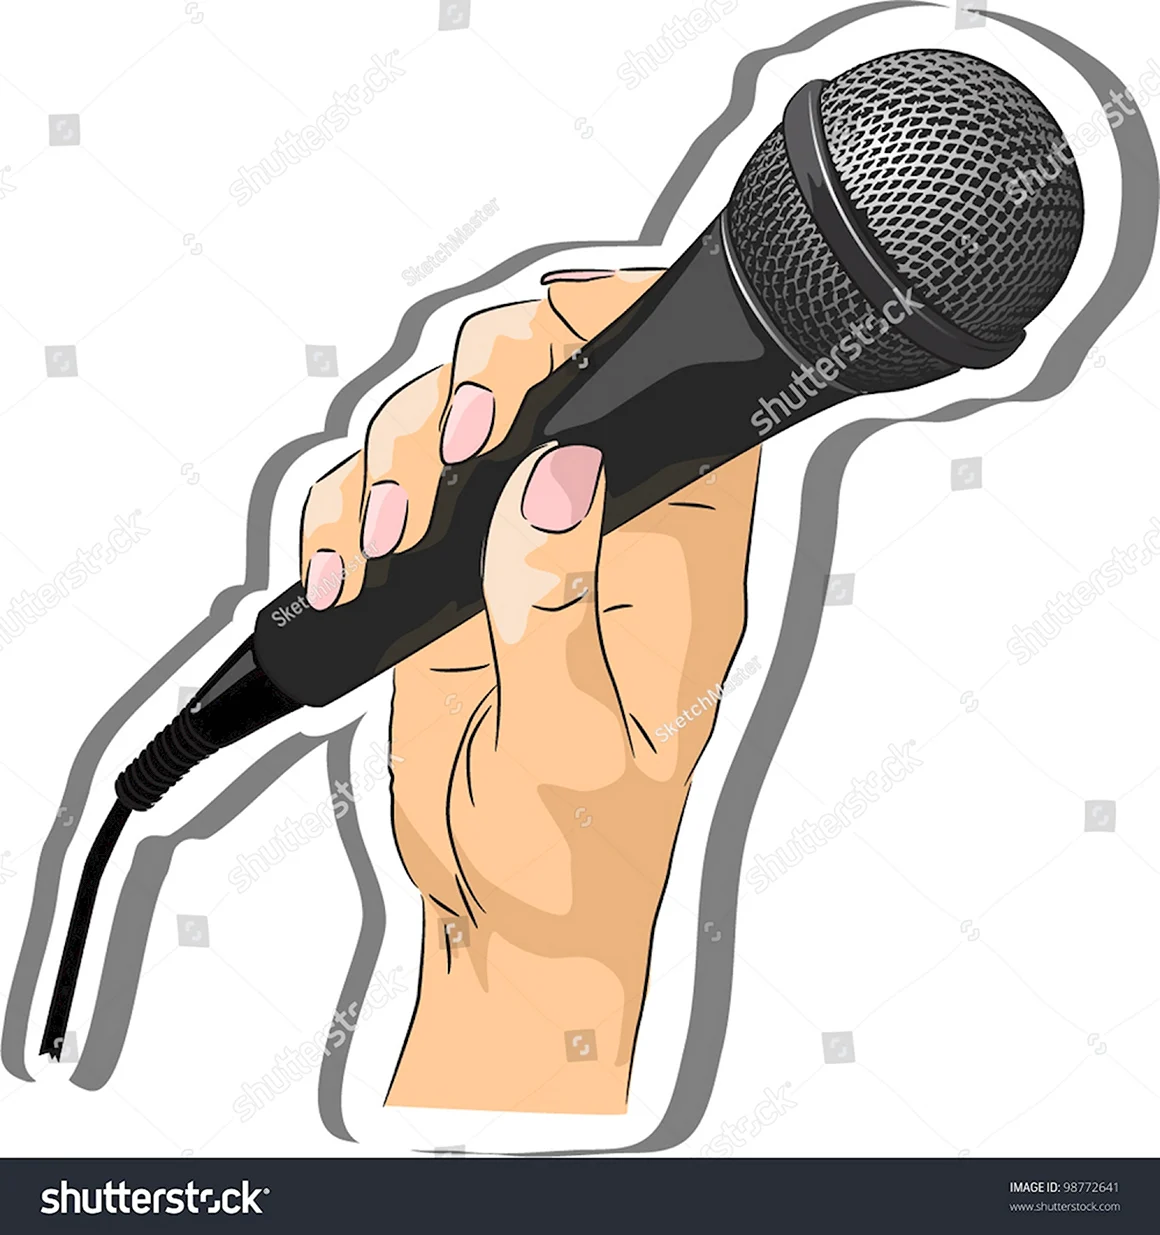 Рука с микрофоном